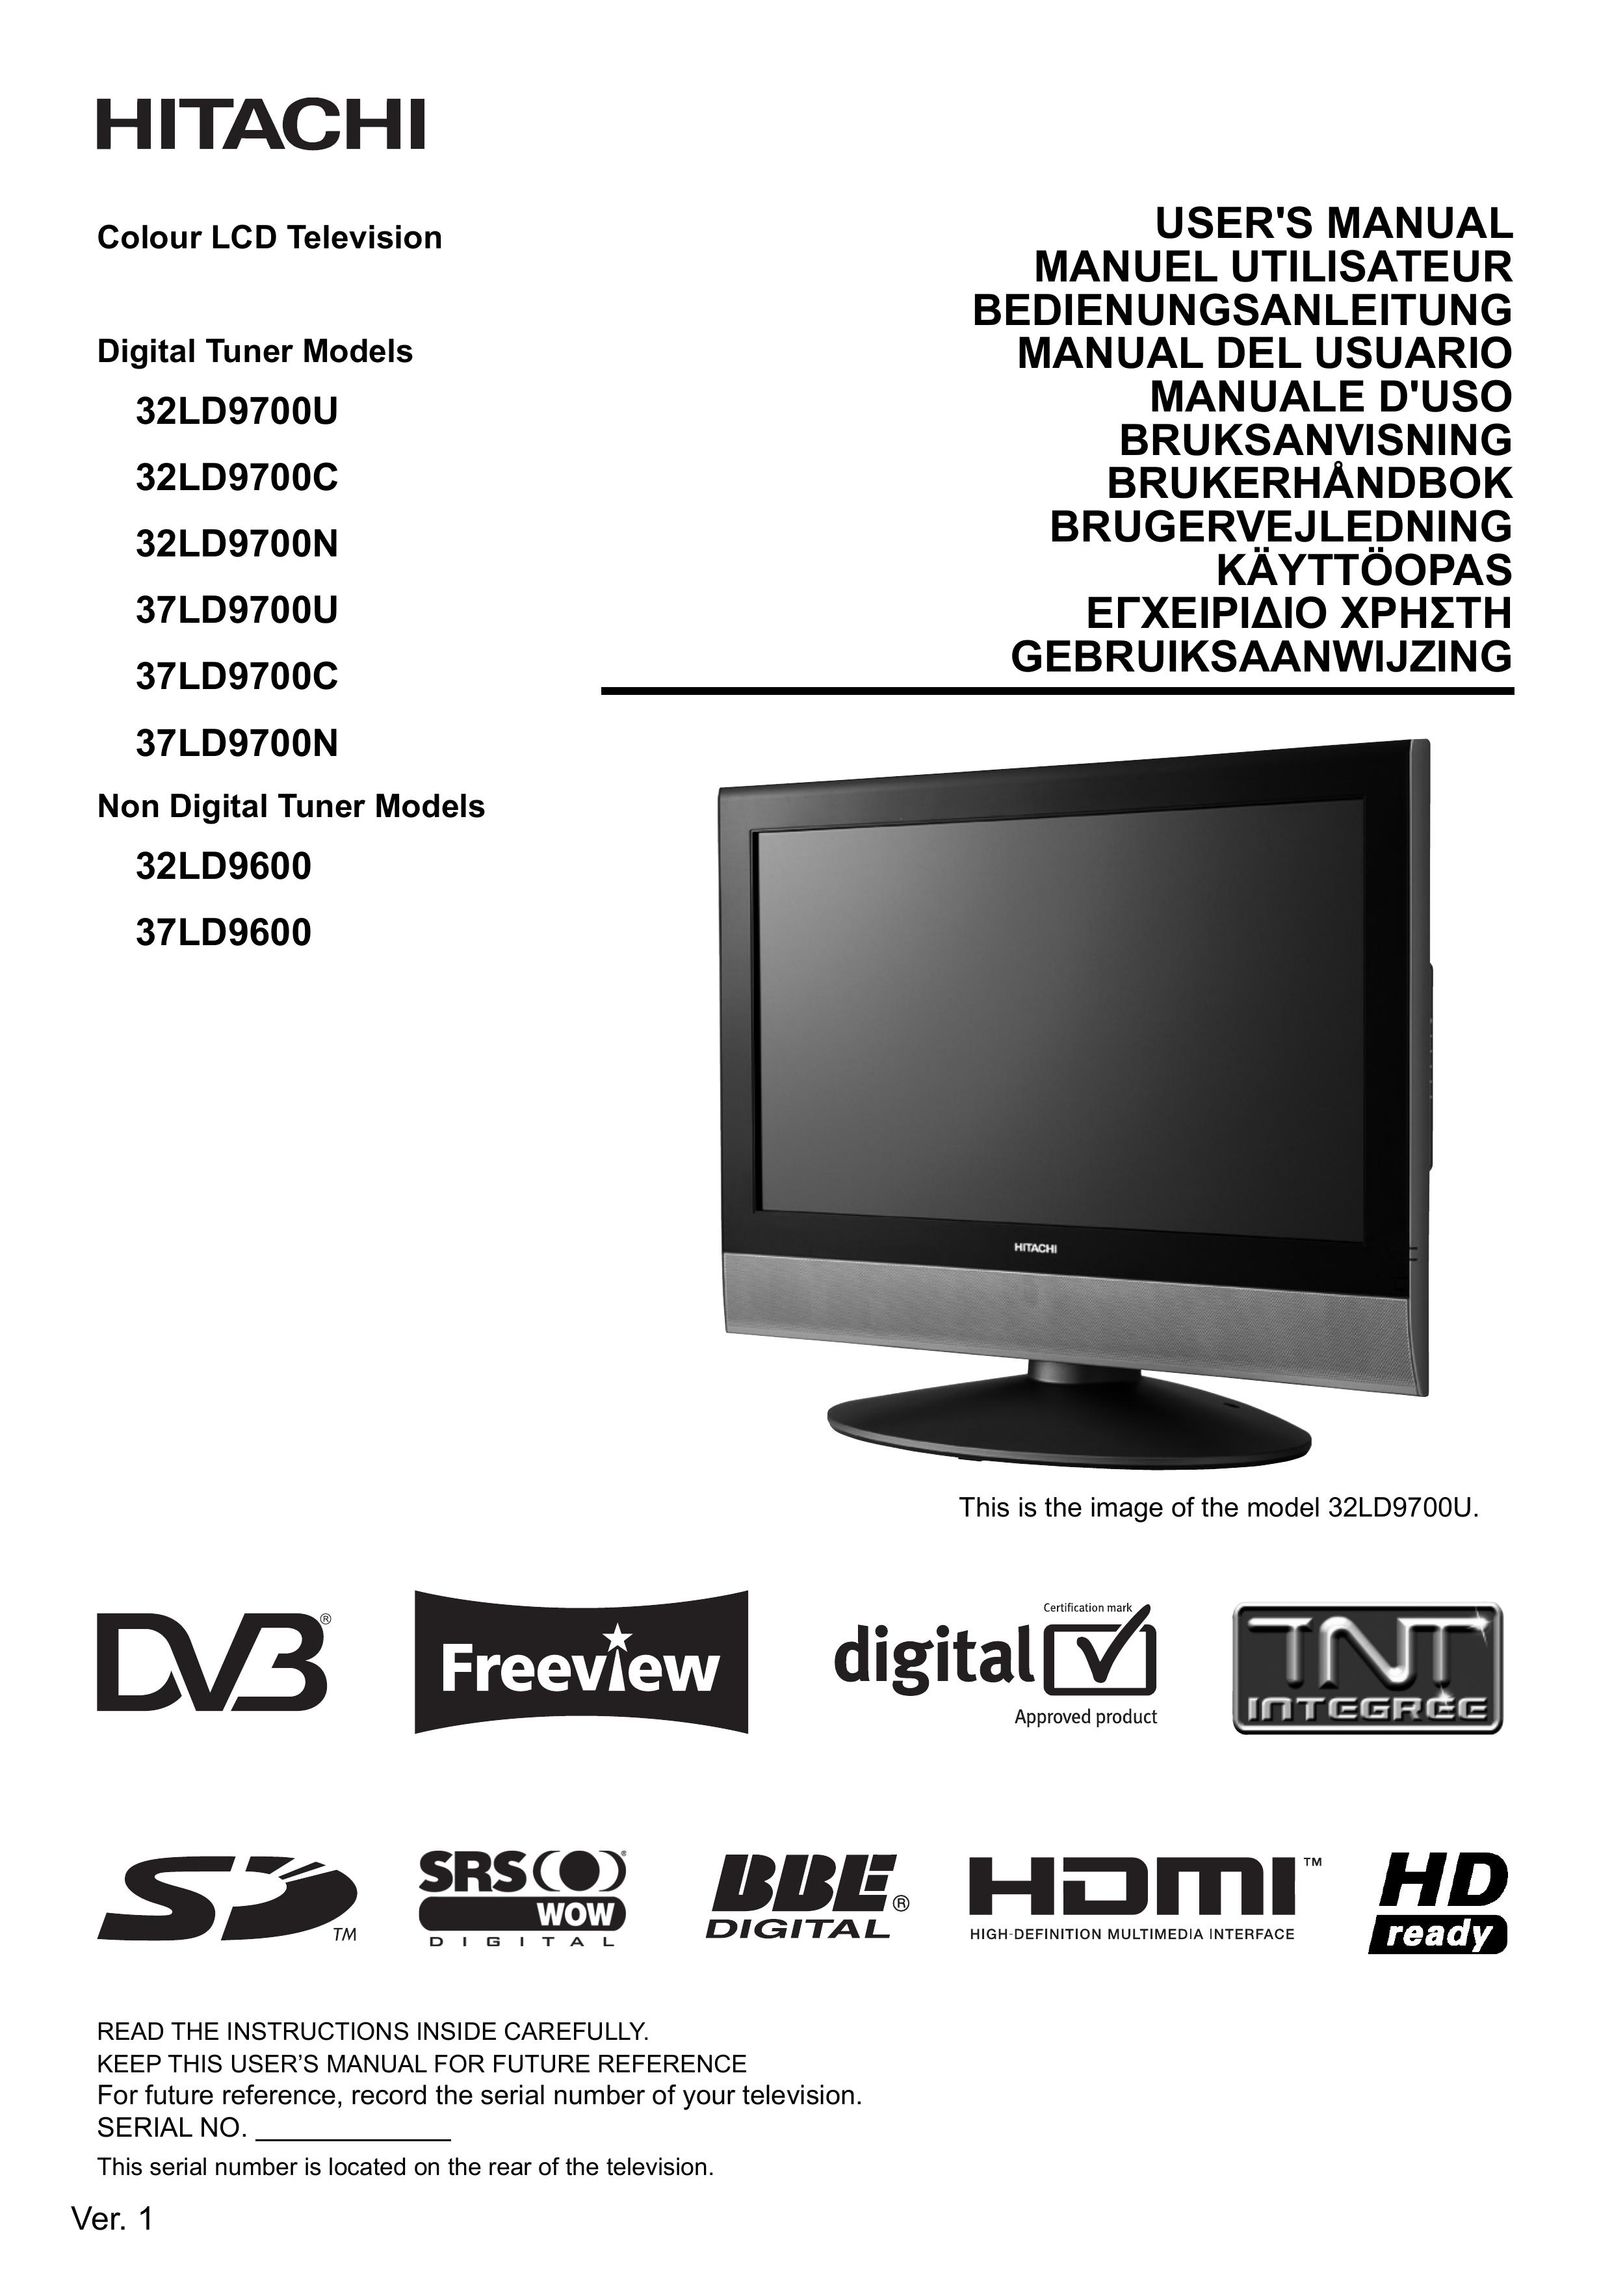 Hitachi 37LD9700N Flat Panel Television User Manual